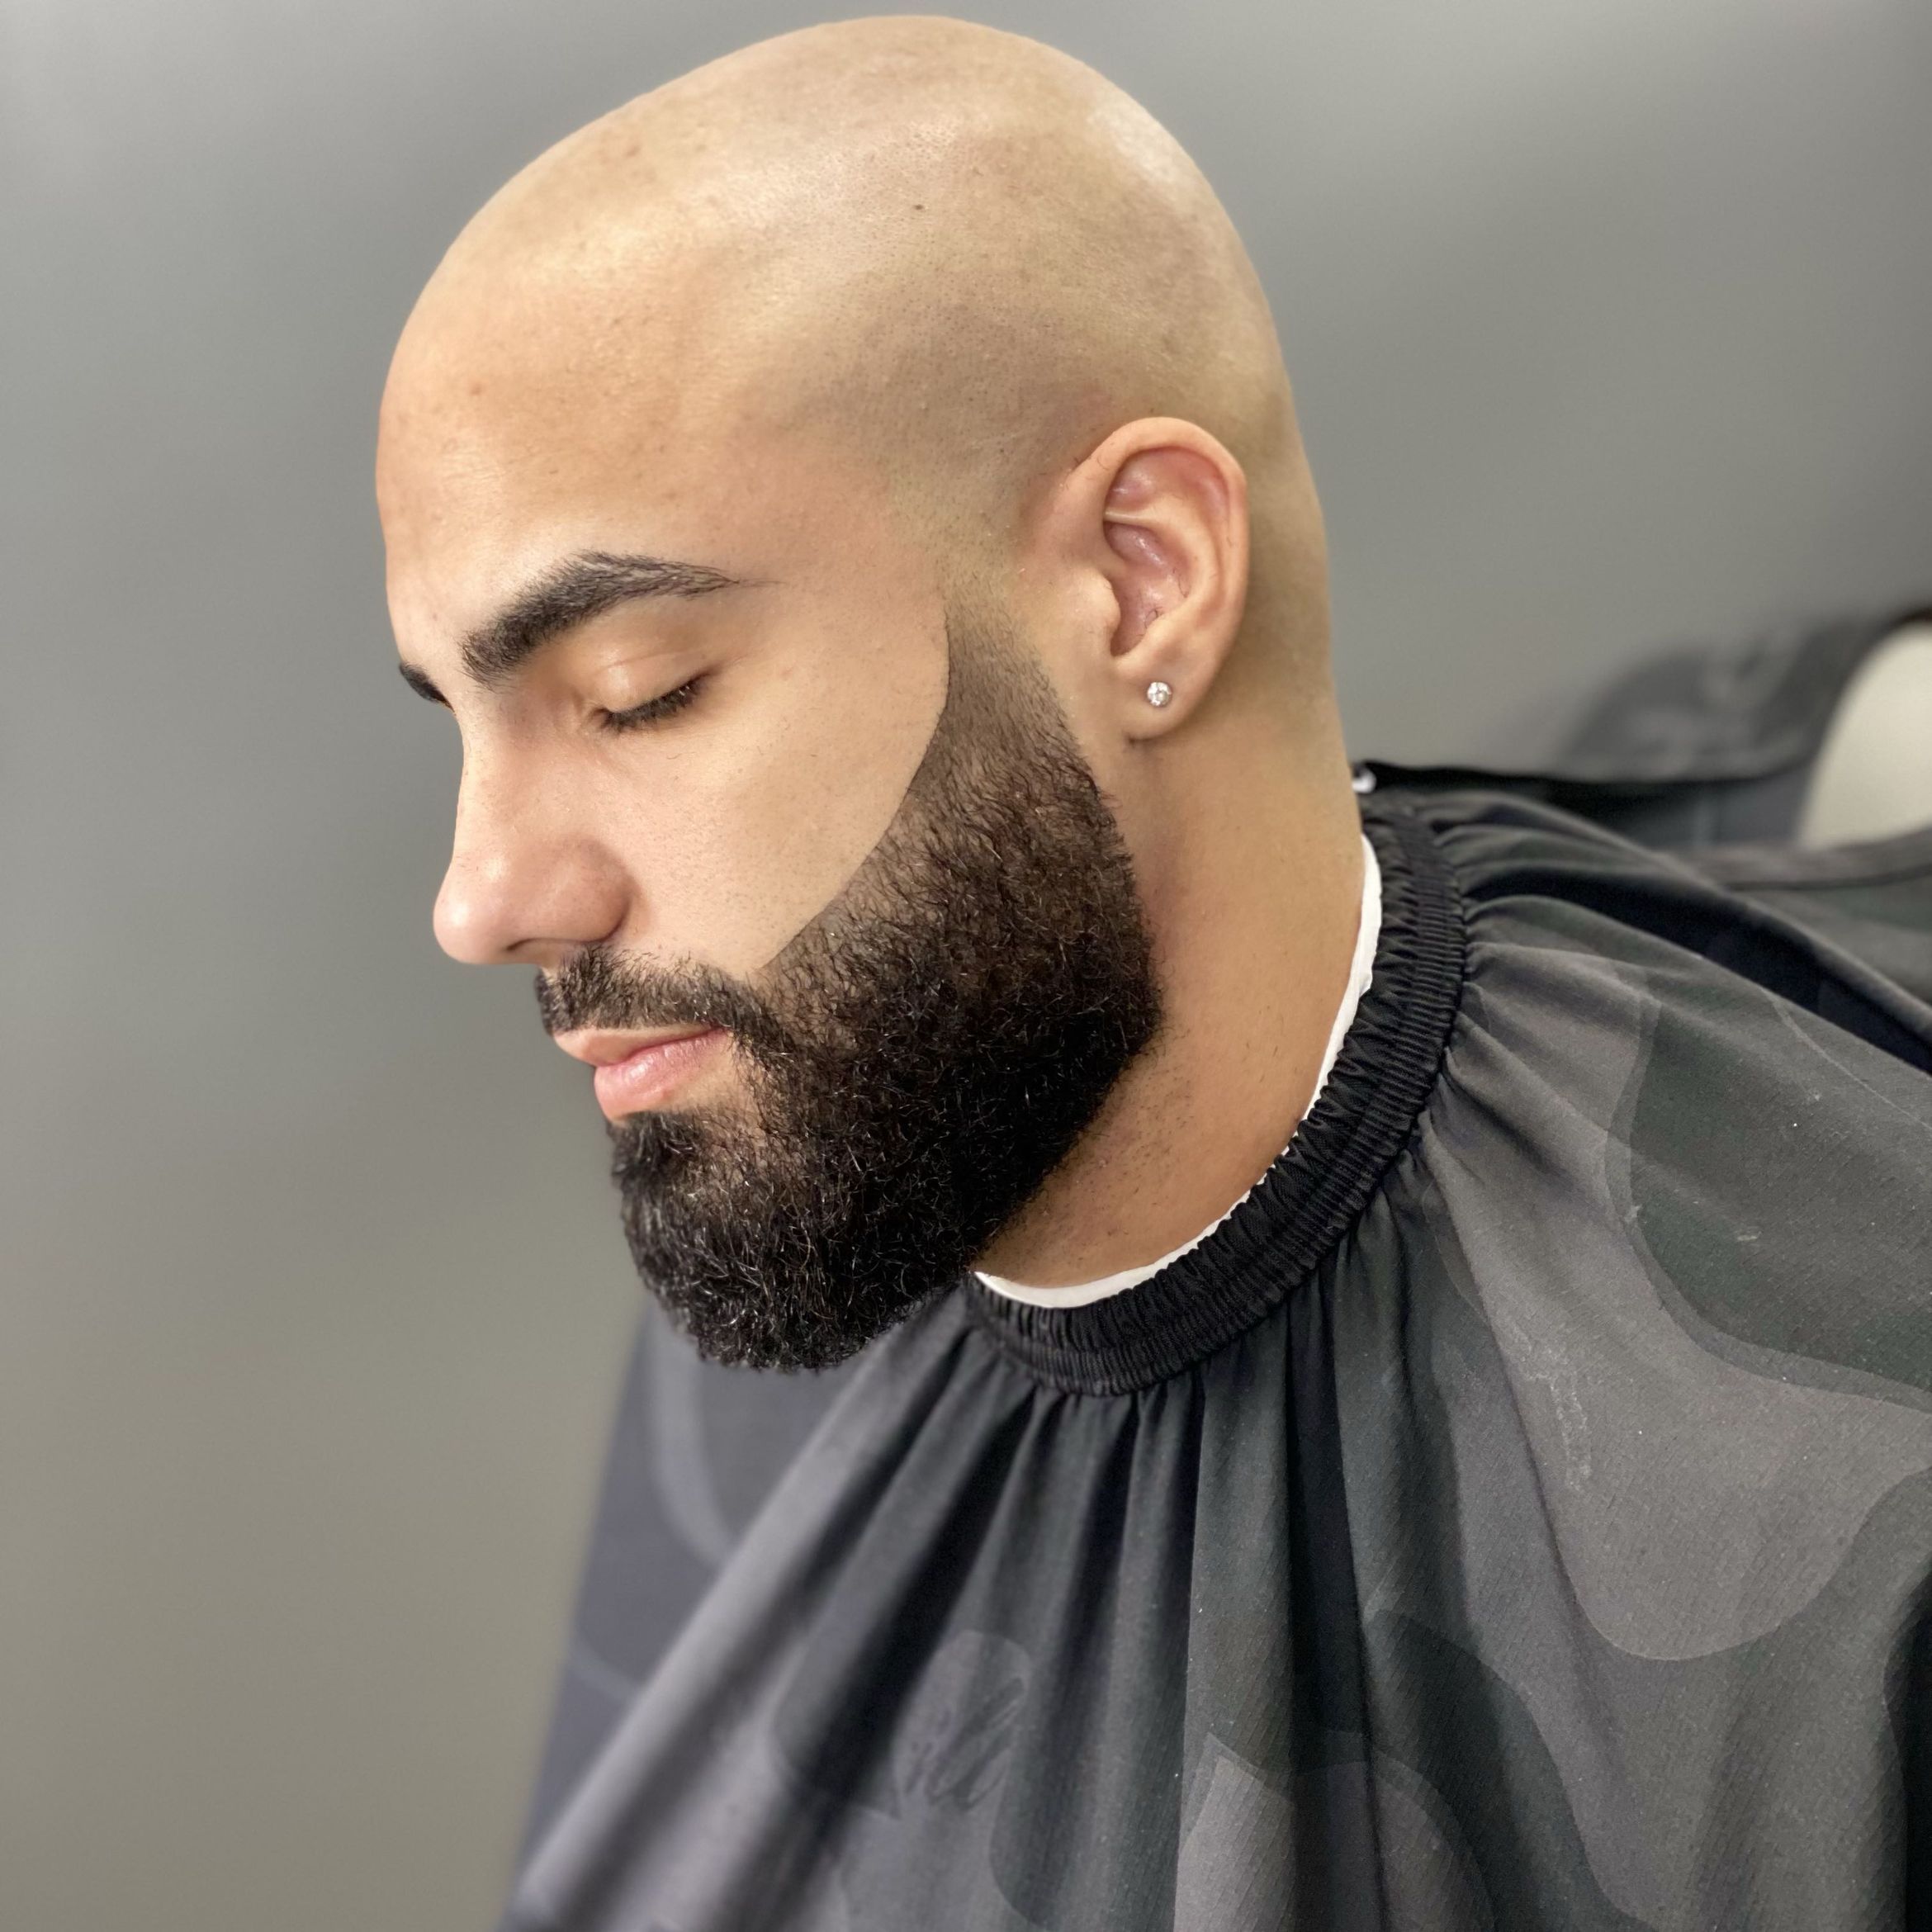 Shave head whit Beard portfolio